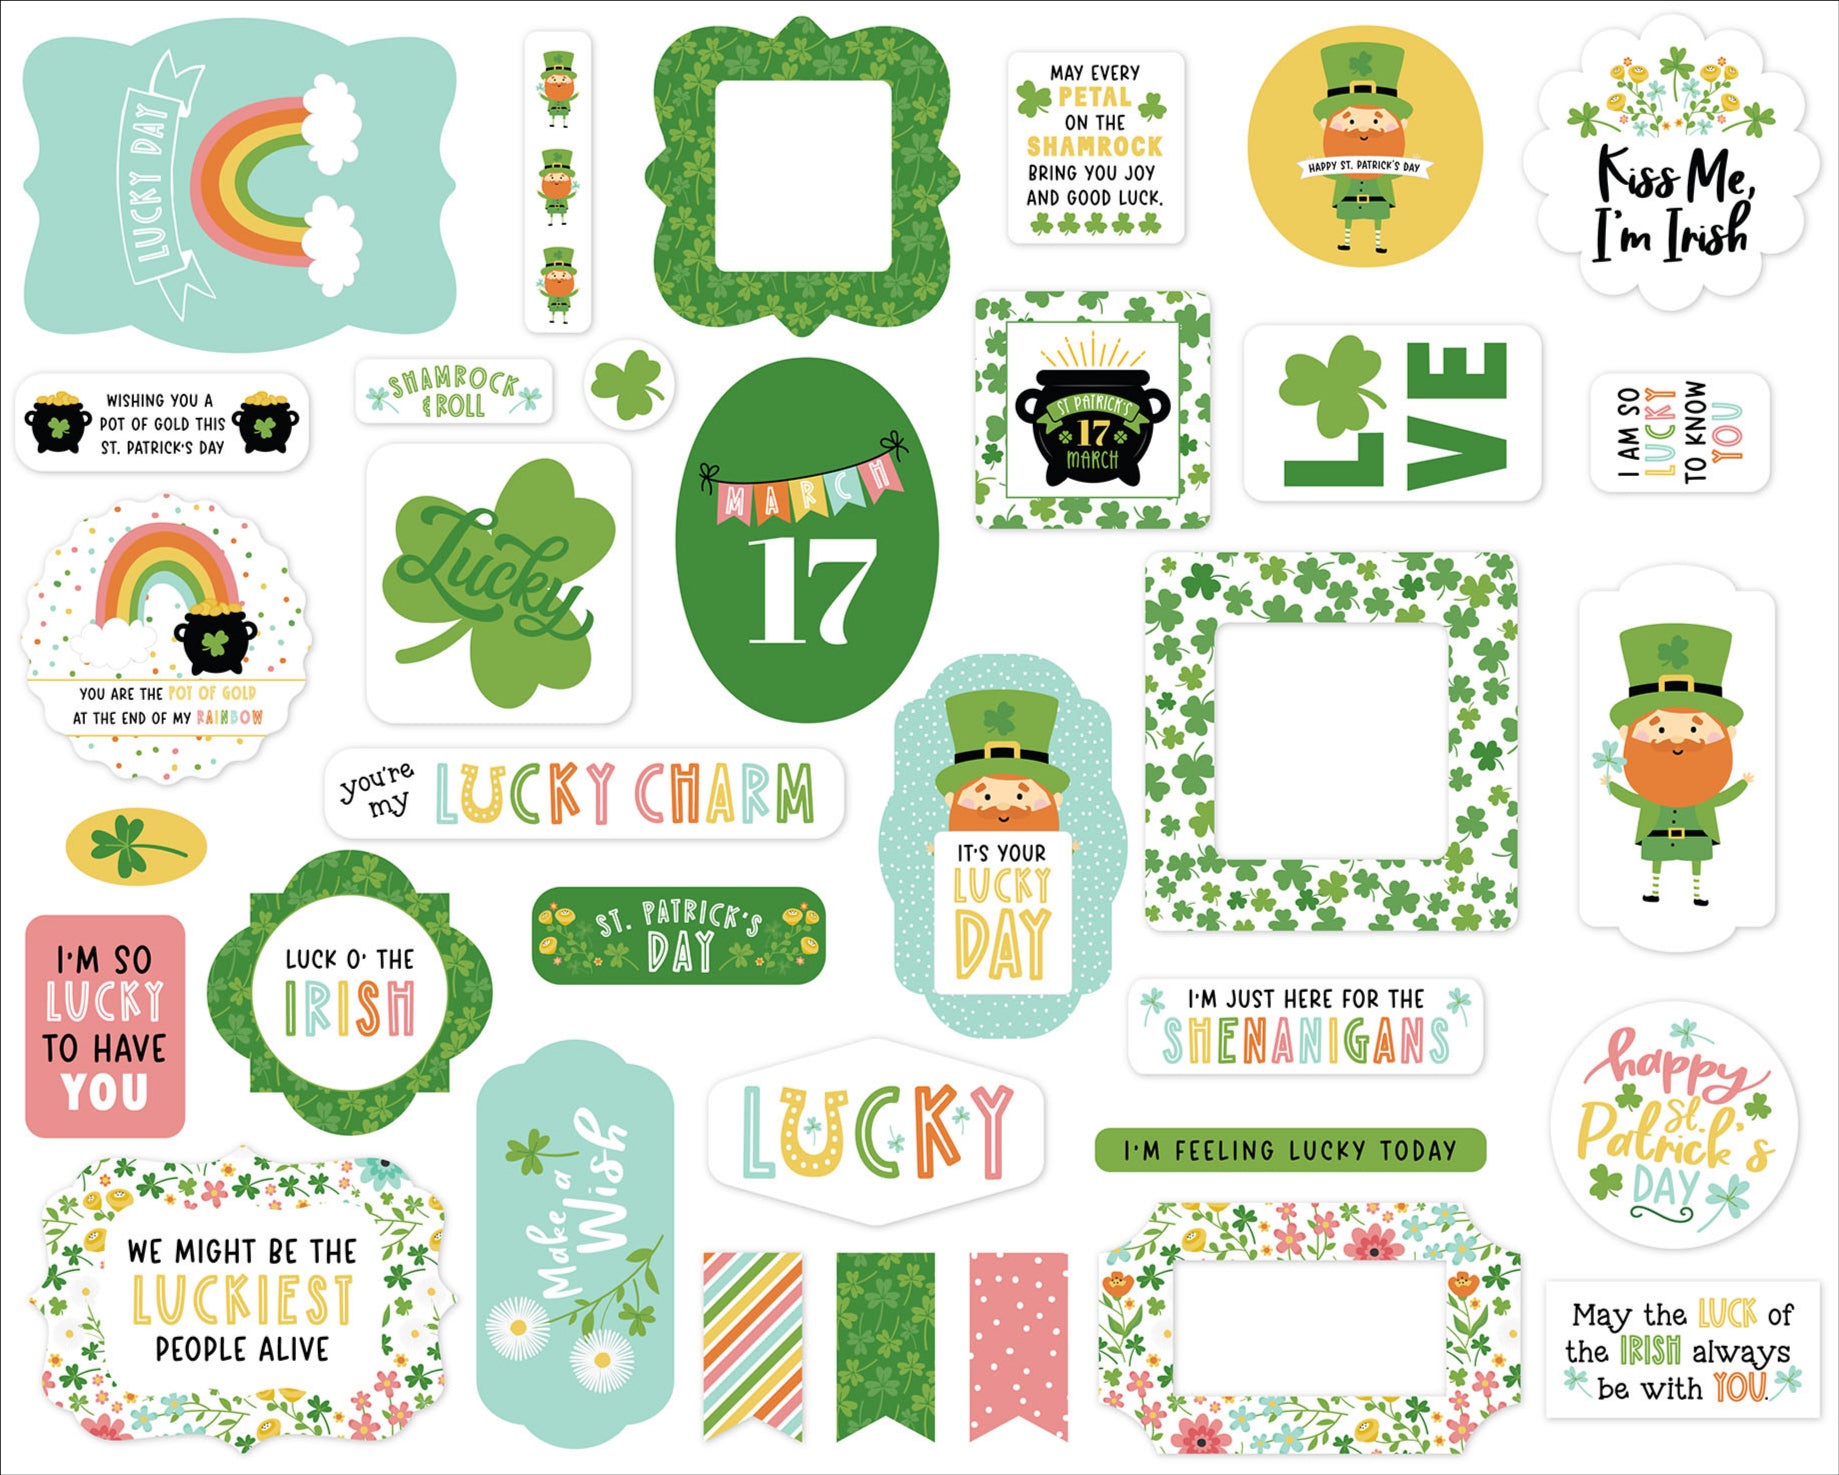 Happy St. Patrick's Day Collection 4x8 Scrapbook Ephemera by Echo Park Paper